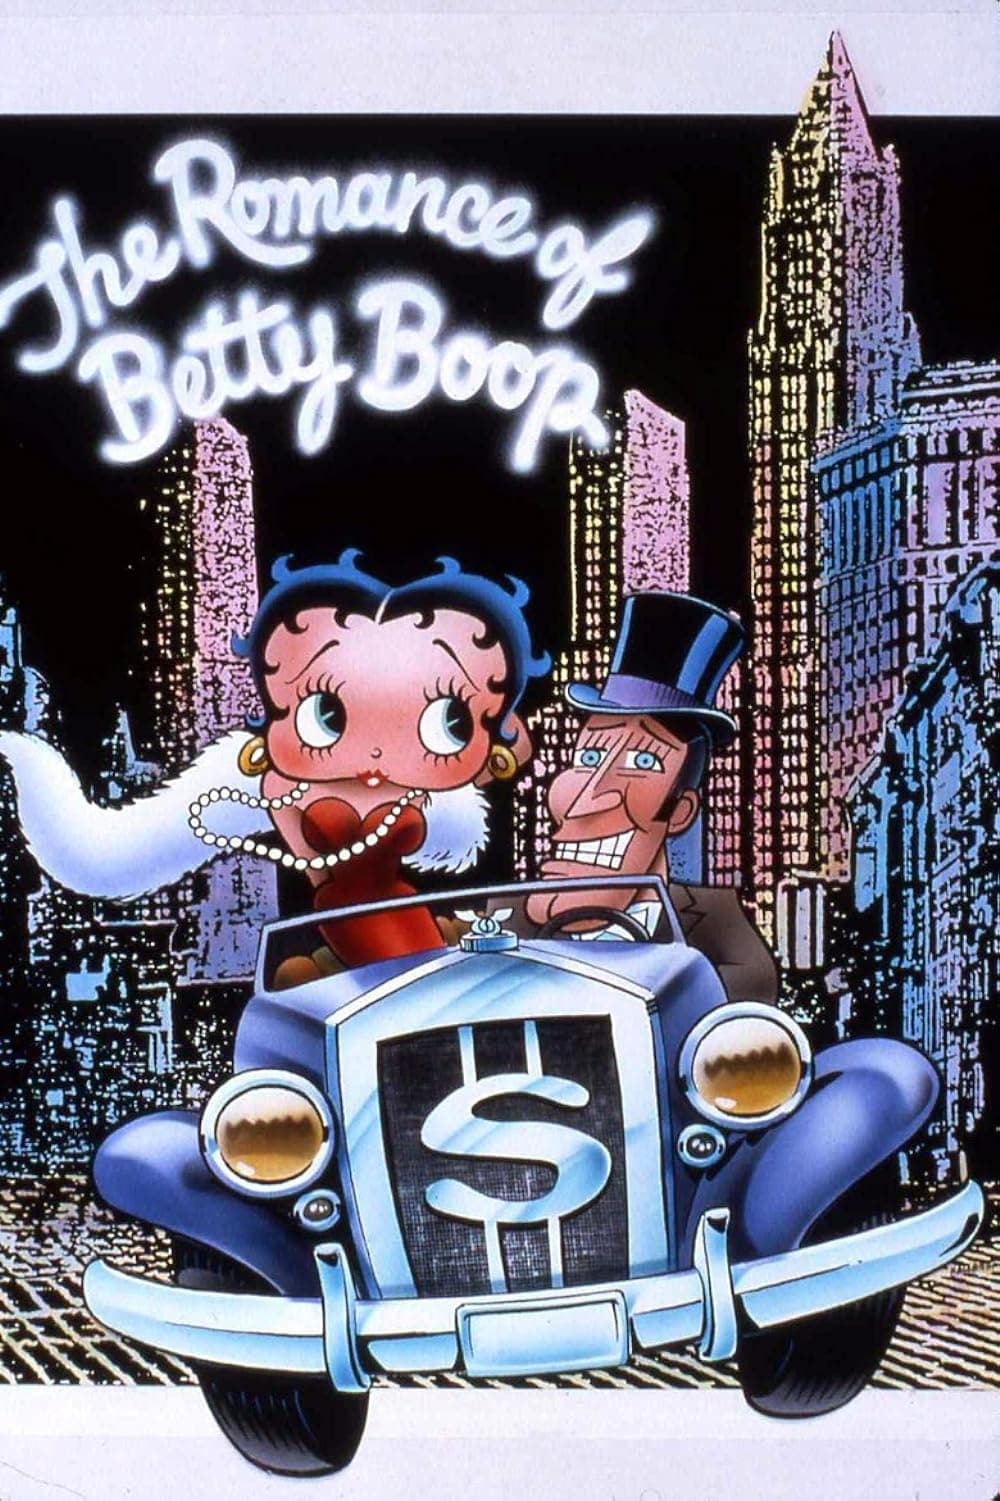 The Romance of Betty Boop (1985)